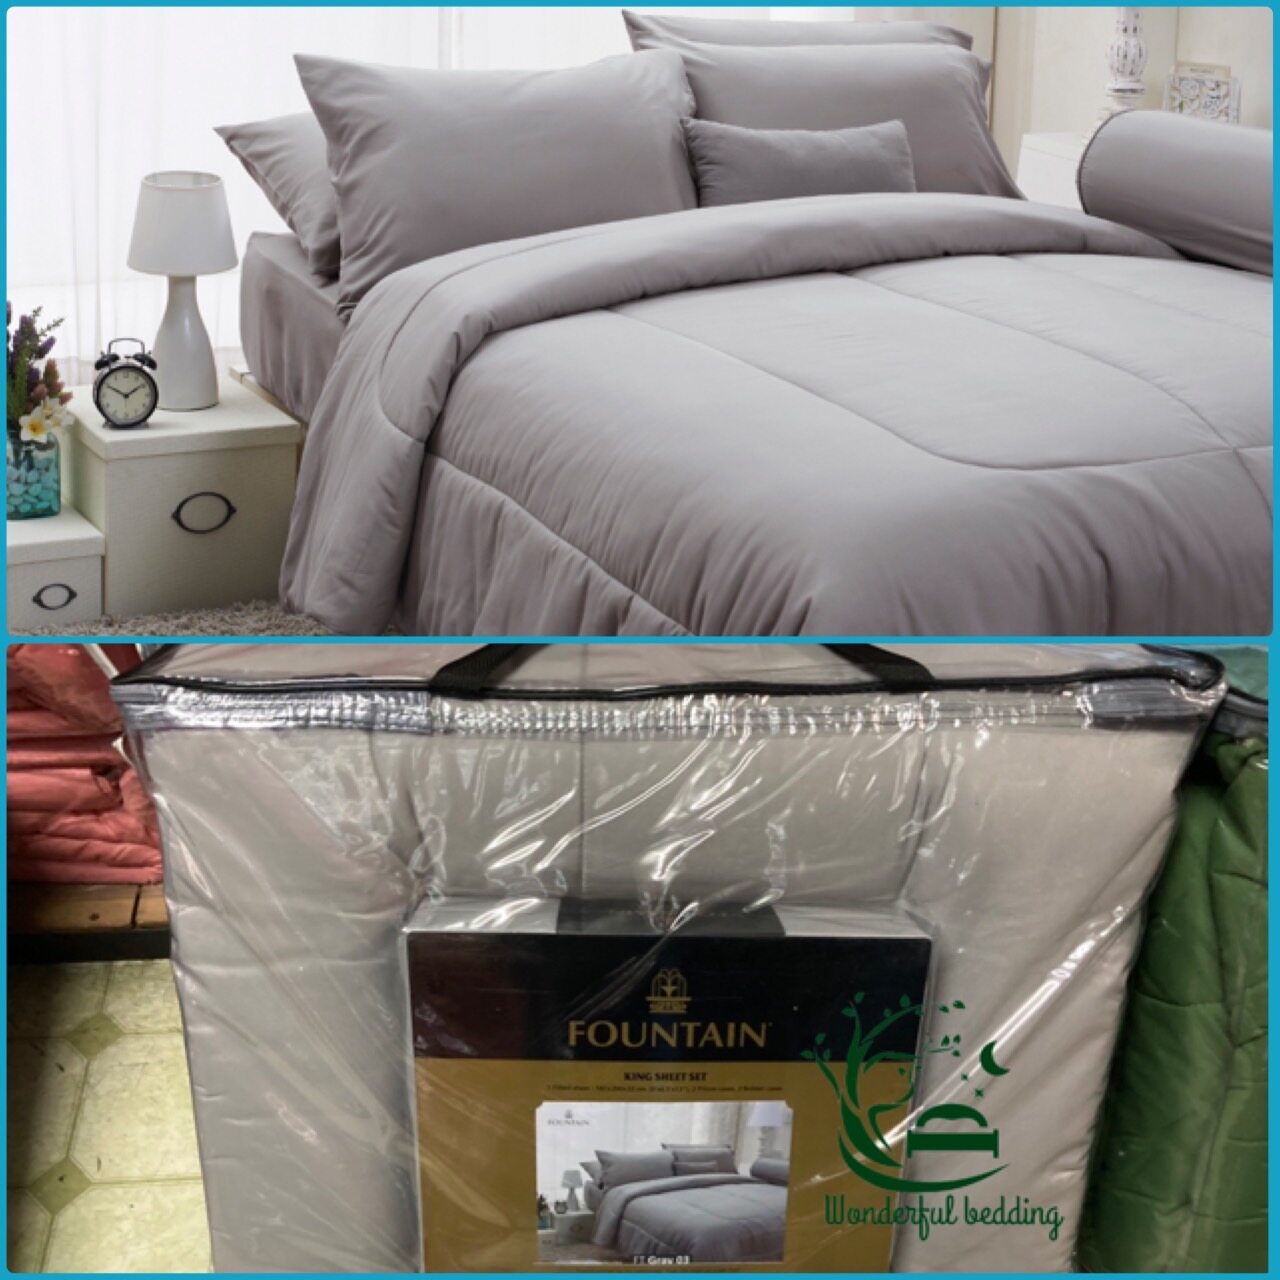 FOUNTAIN ชุดผ้าปู (ไม่มีผ้านวม) ผ้าปู ที่นอน แท้ 100% FTC สีพื้น เขียว Green Gray เทา ขนาด 3.5 5 6ฟุต ชุดเครื่องนอน ผ้านวม ผ้าปูที่นอน wonderful bedding  variation3 Gray3ขนาดสินค้า 3.5 ฟุต